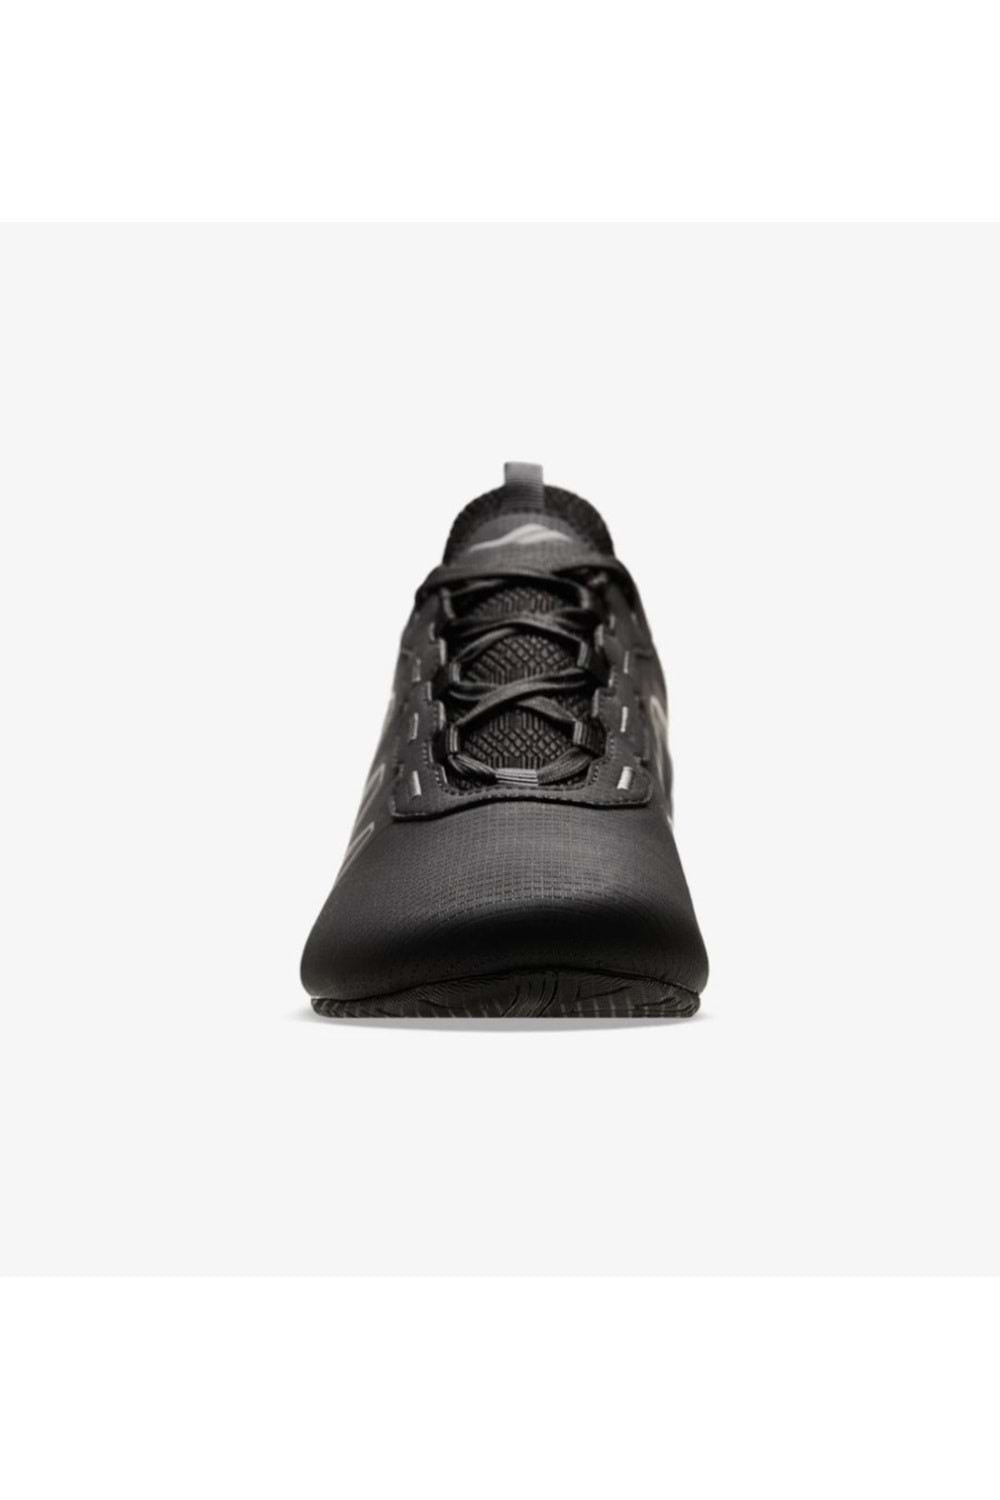 Lescon Artus Artus Sneakers Spor Ayakkabı - Siyah